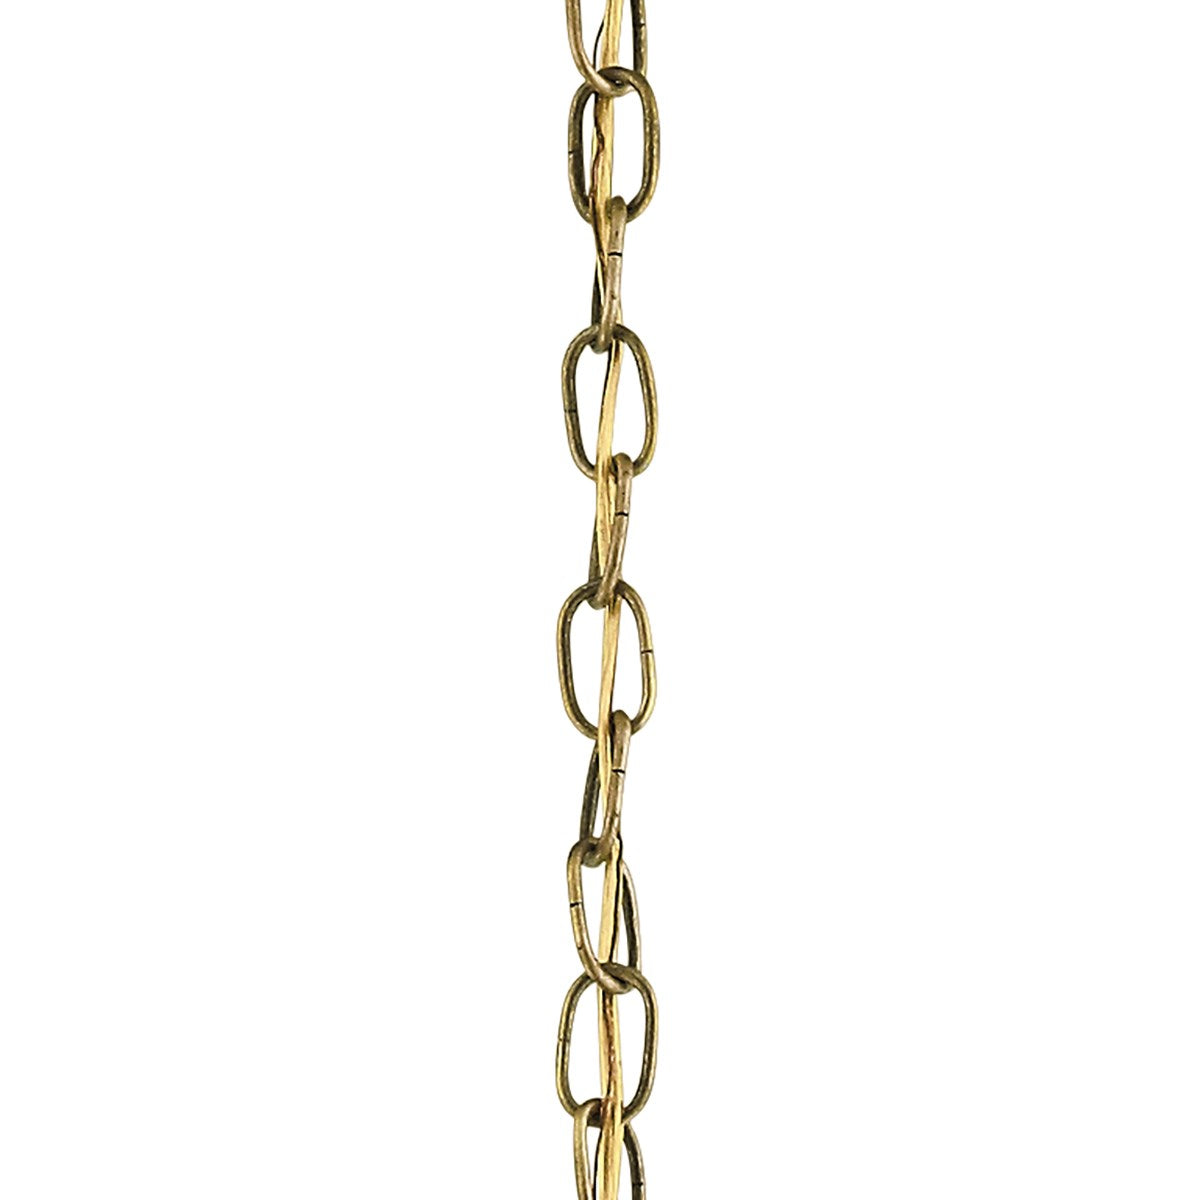 36" Standard Gauge Chain